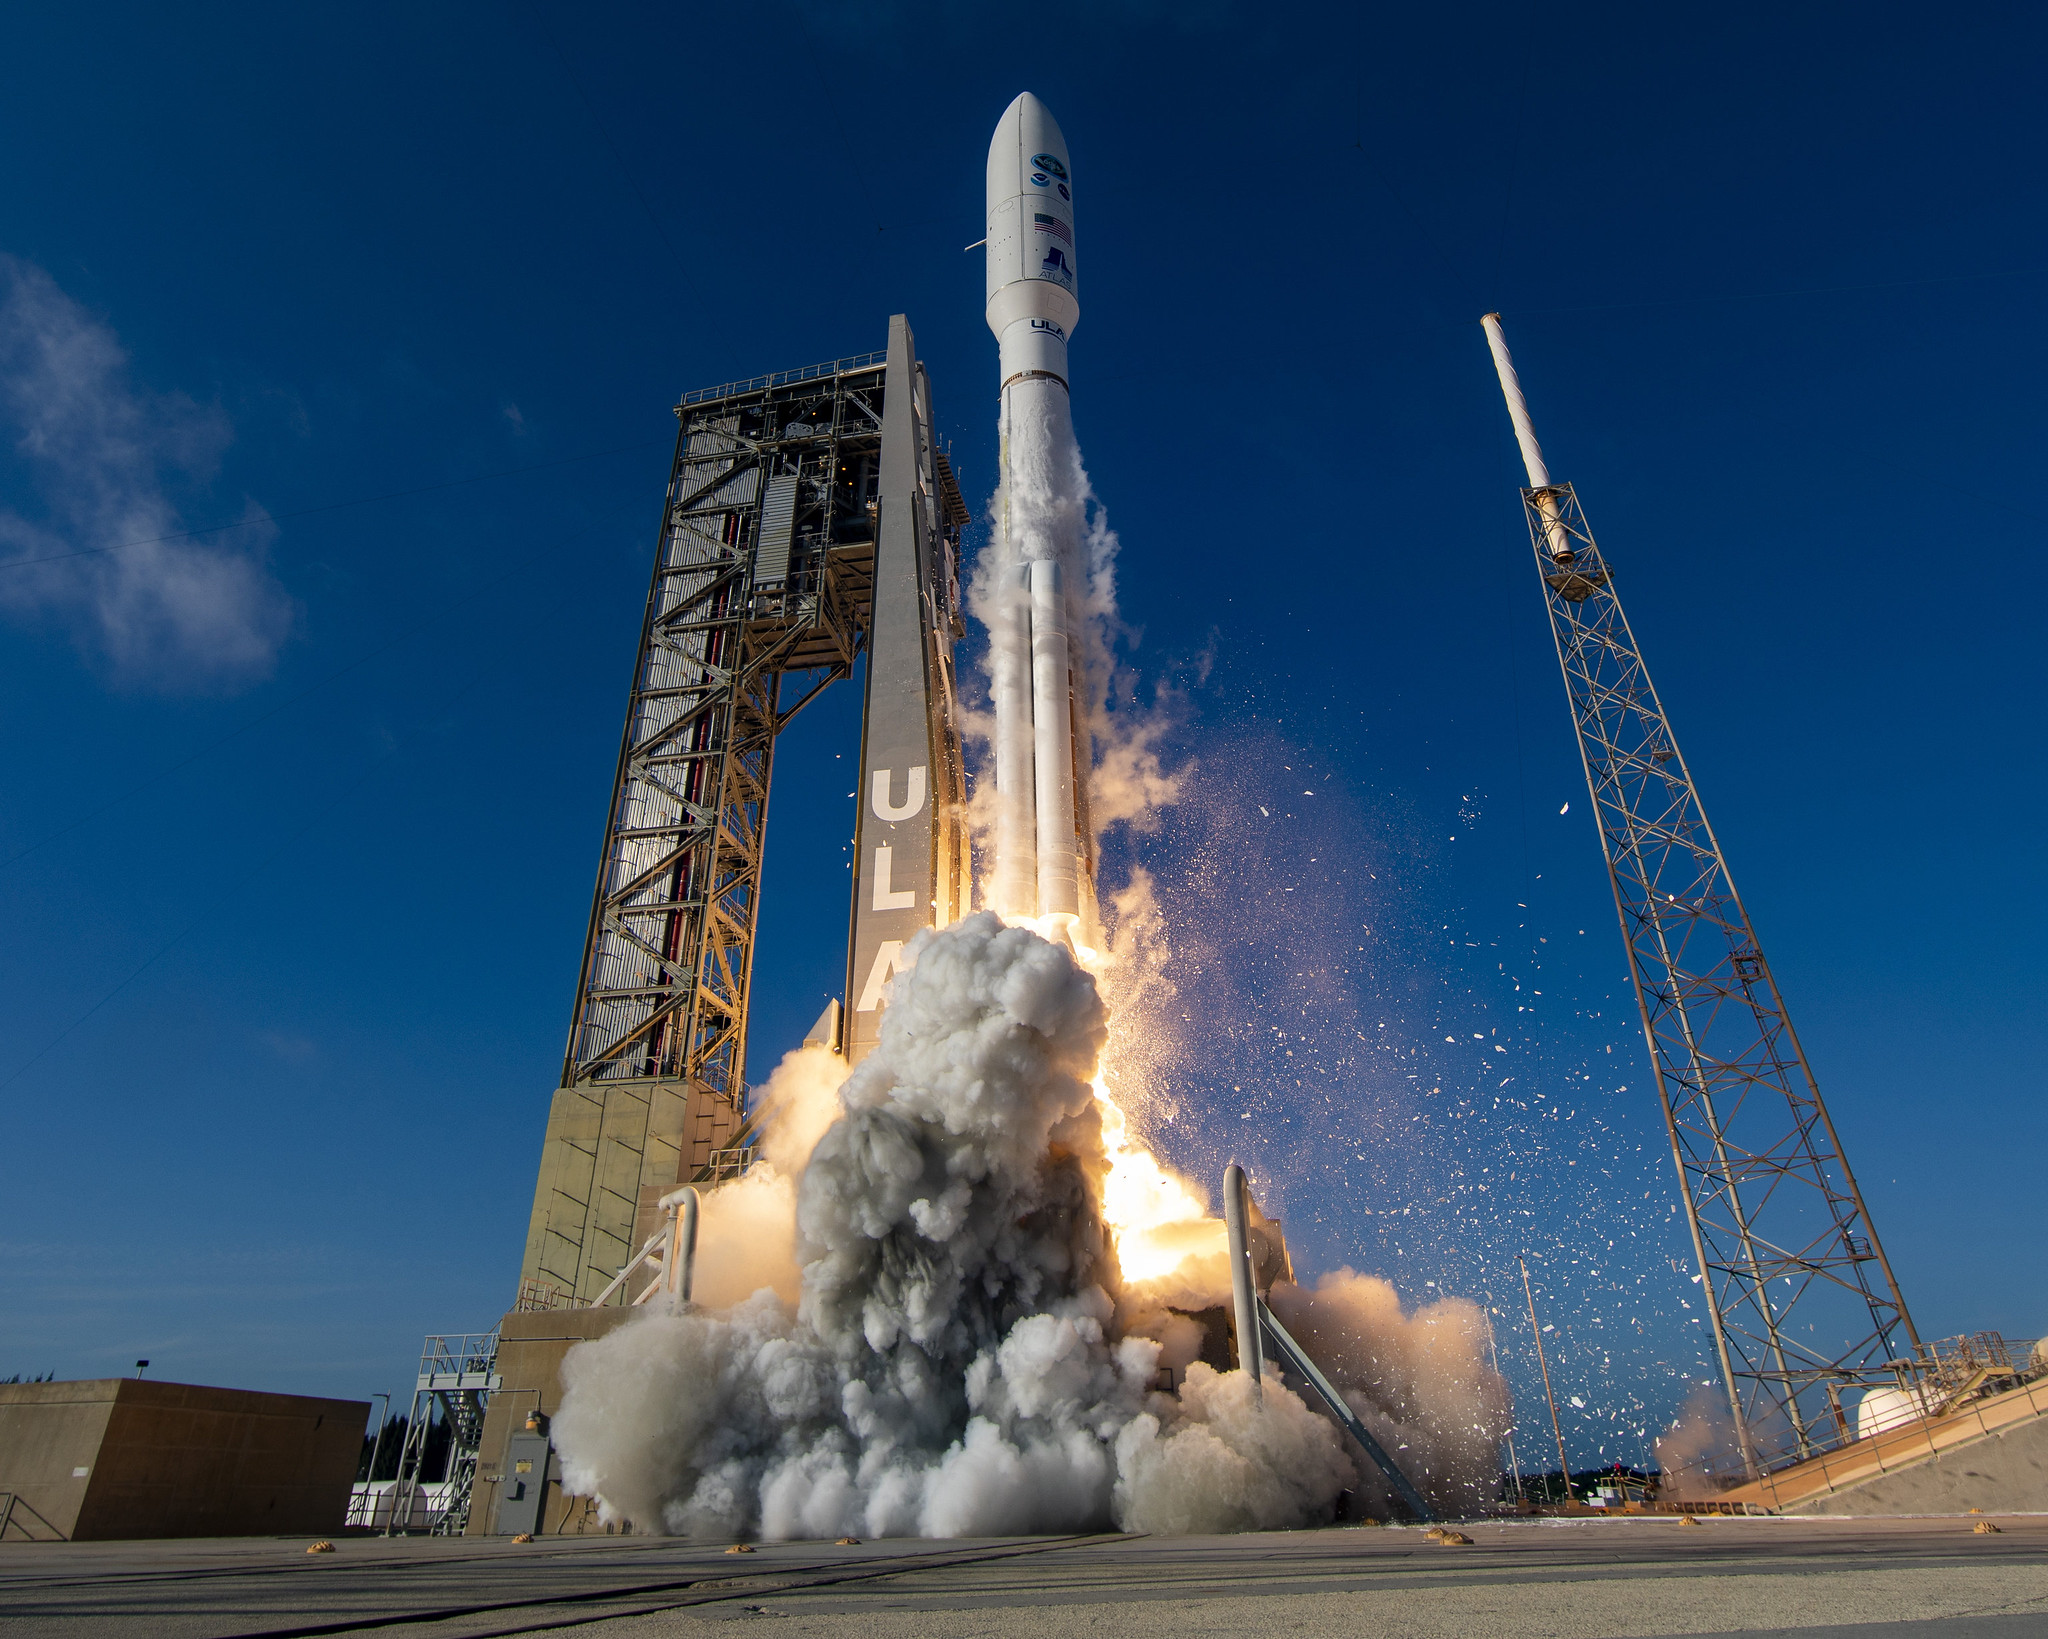 ULA's atlas v rocket launching GOES-T weather satellite for NOAA